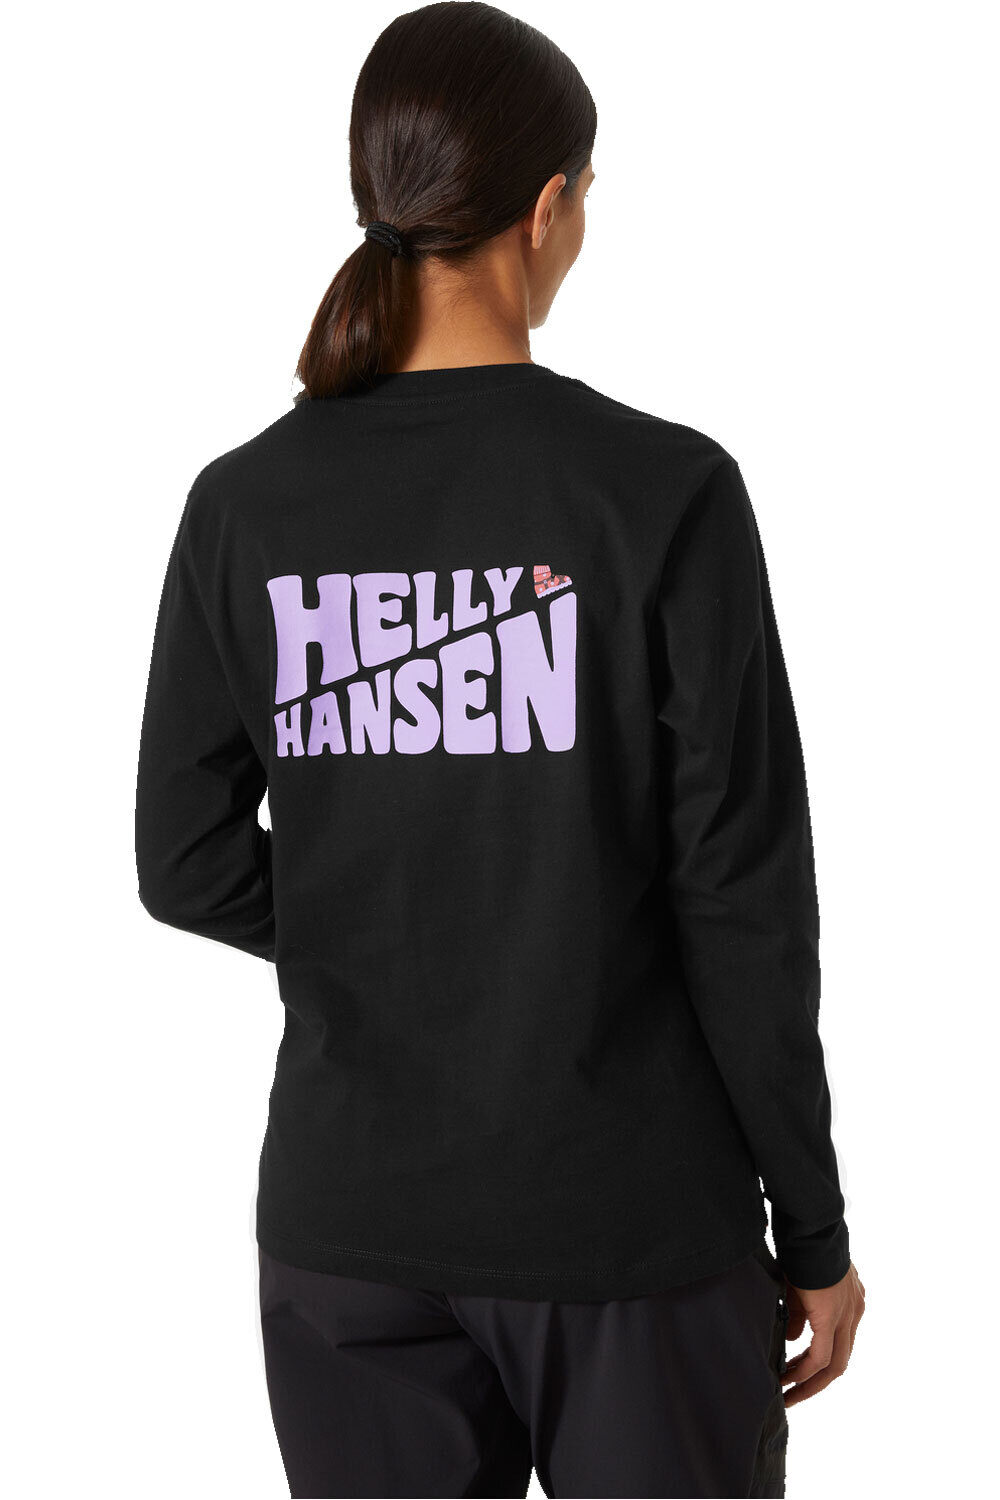 Helly Hansen camiseta montaña manga larga hombre F2F W ORGANIC COTTON LS TEE vista trasera